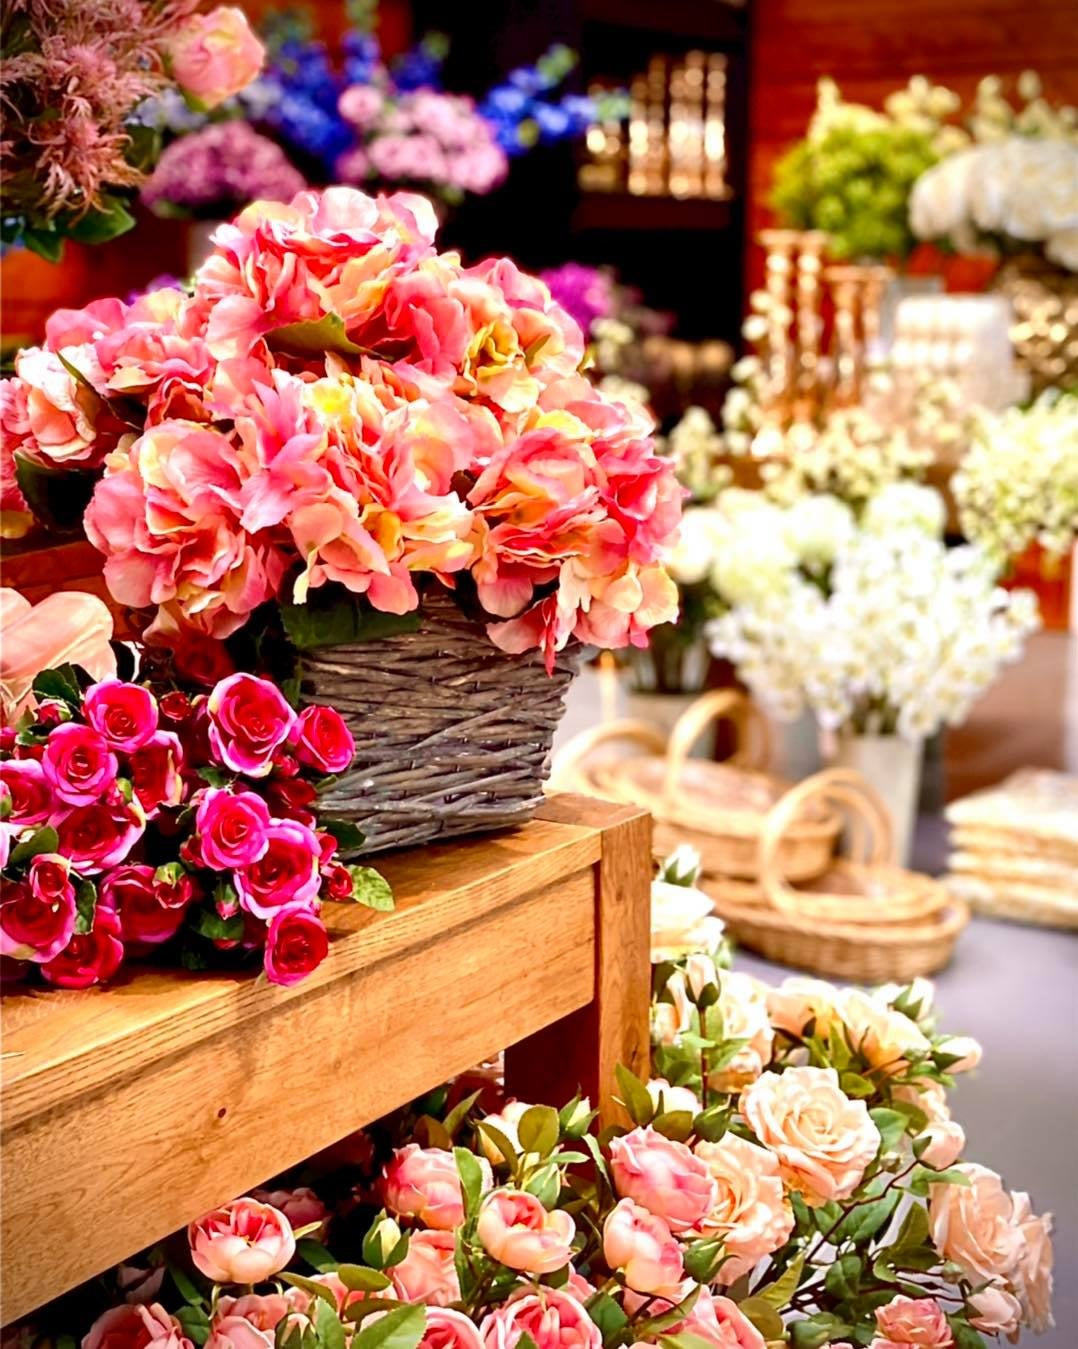 💐 Birmingham Floral & Decorations department